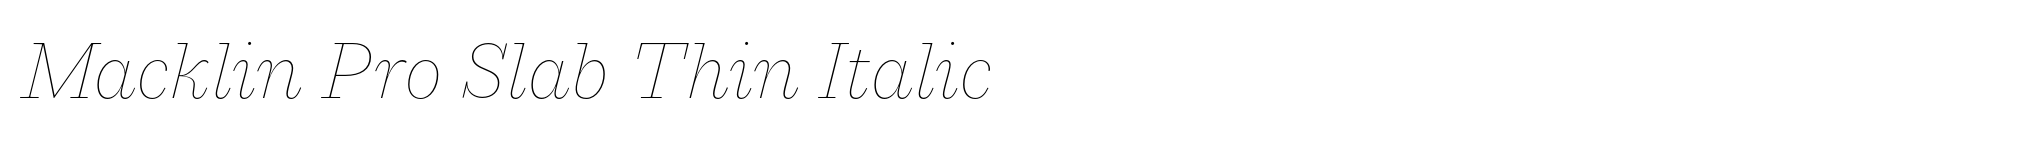 Macklin Pro Slab Thin Italic image